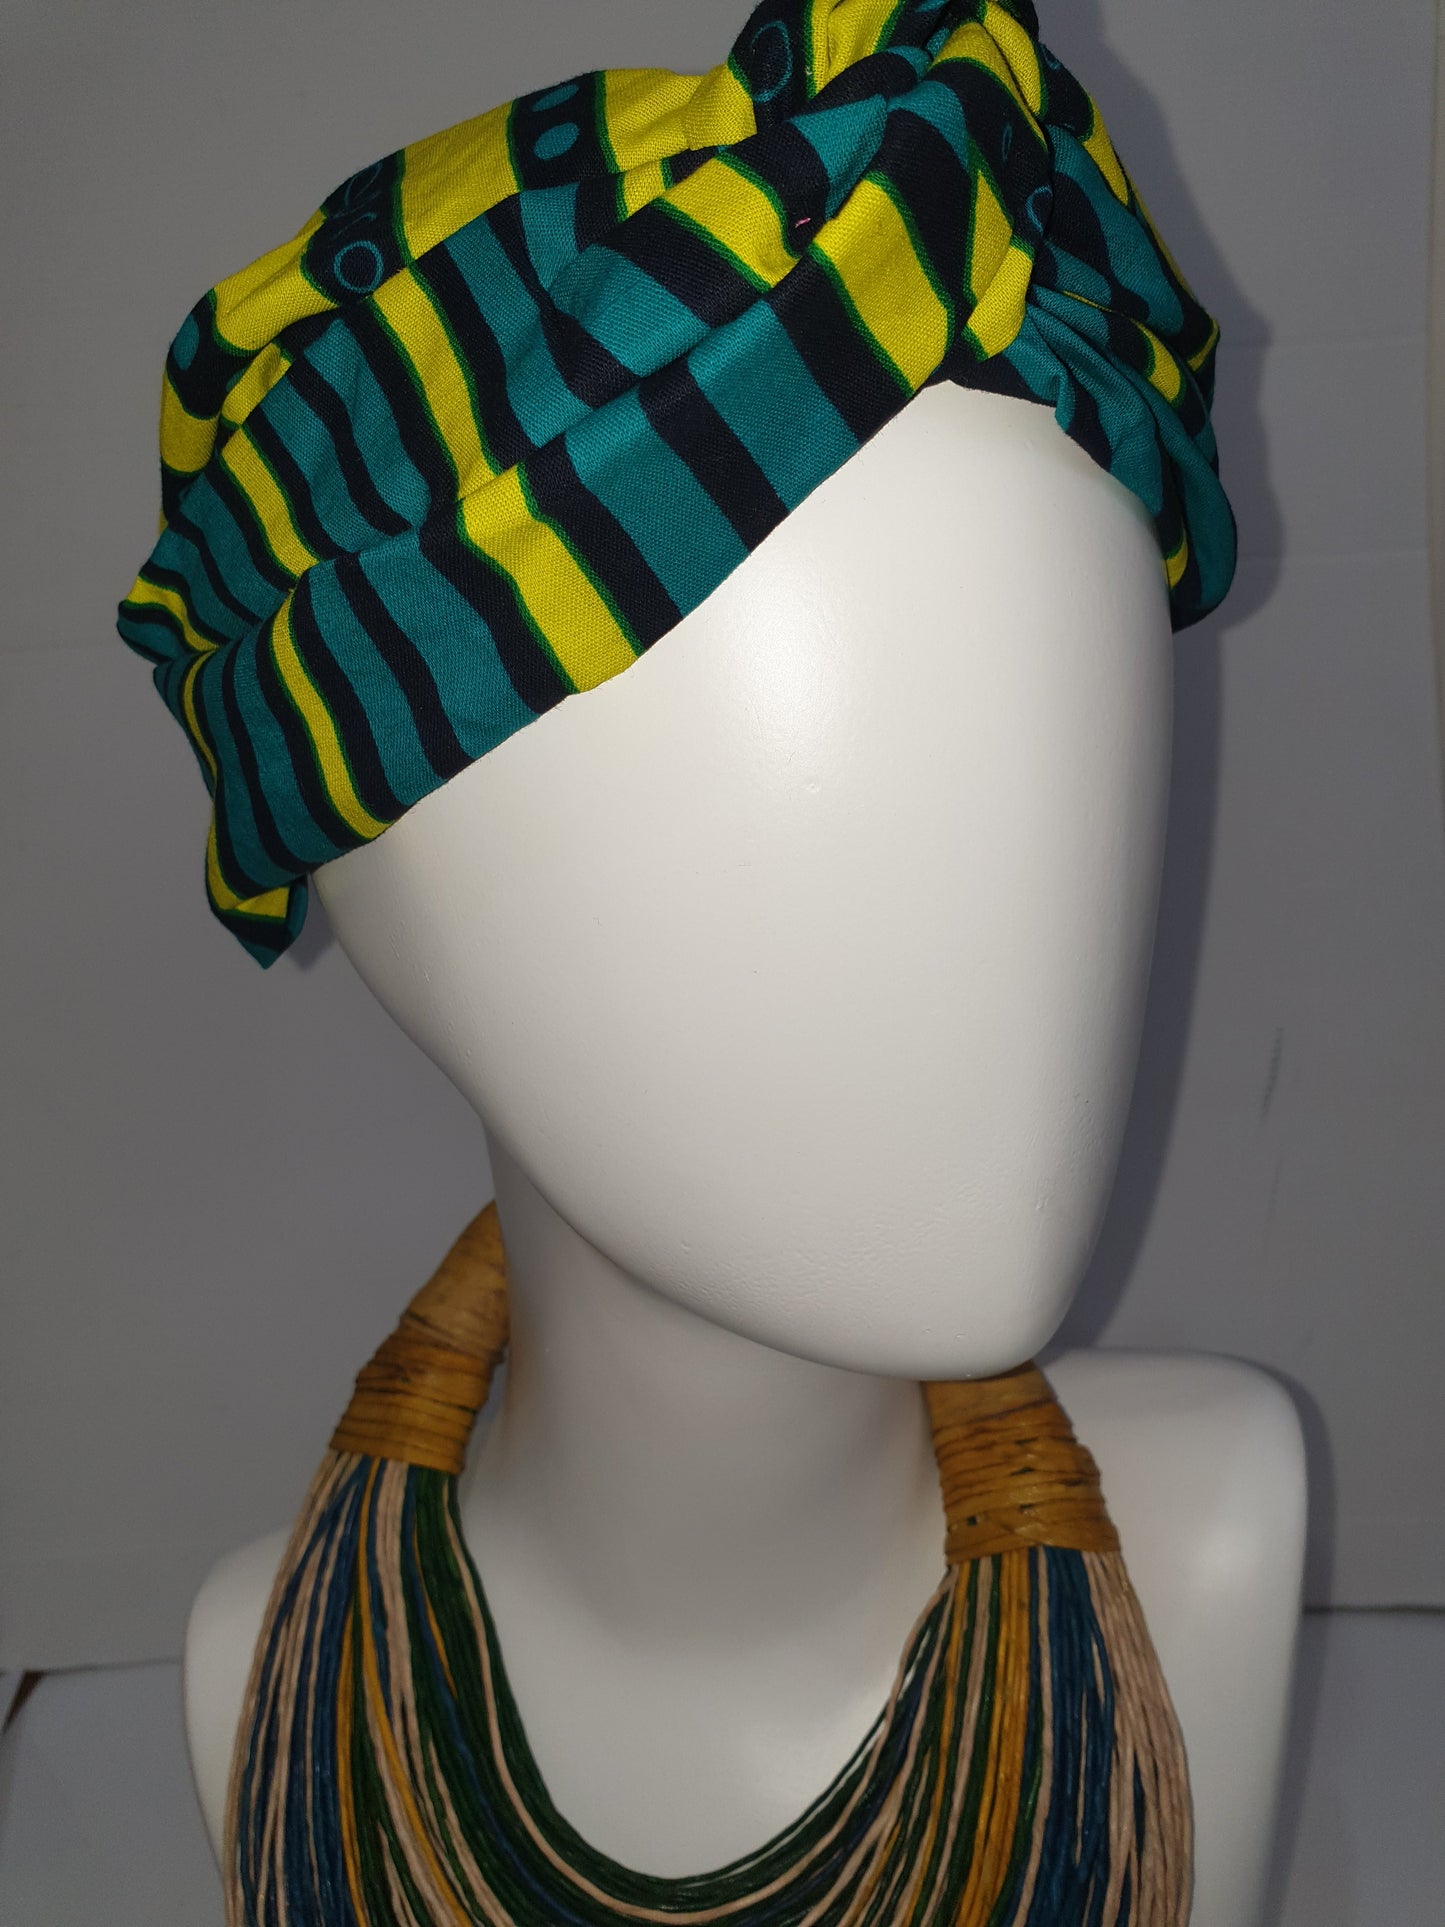 Green and yellow African print turban style headband